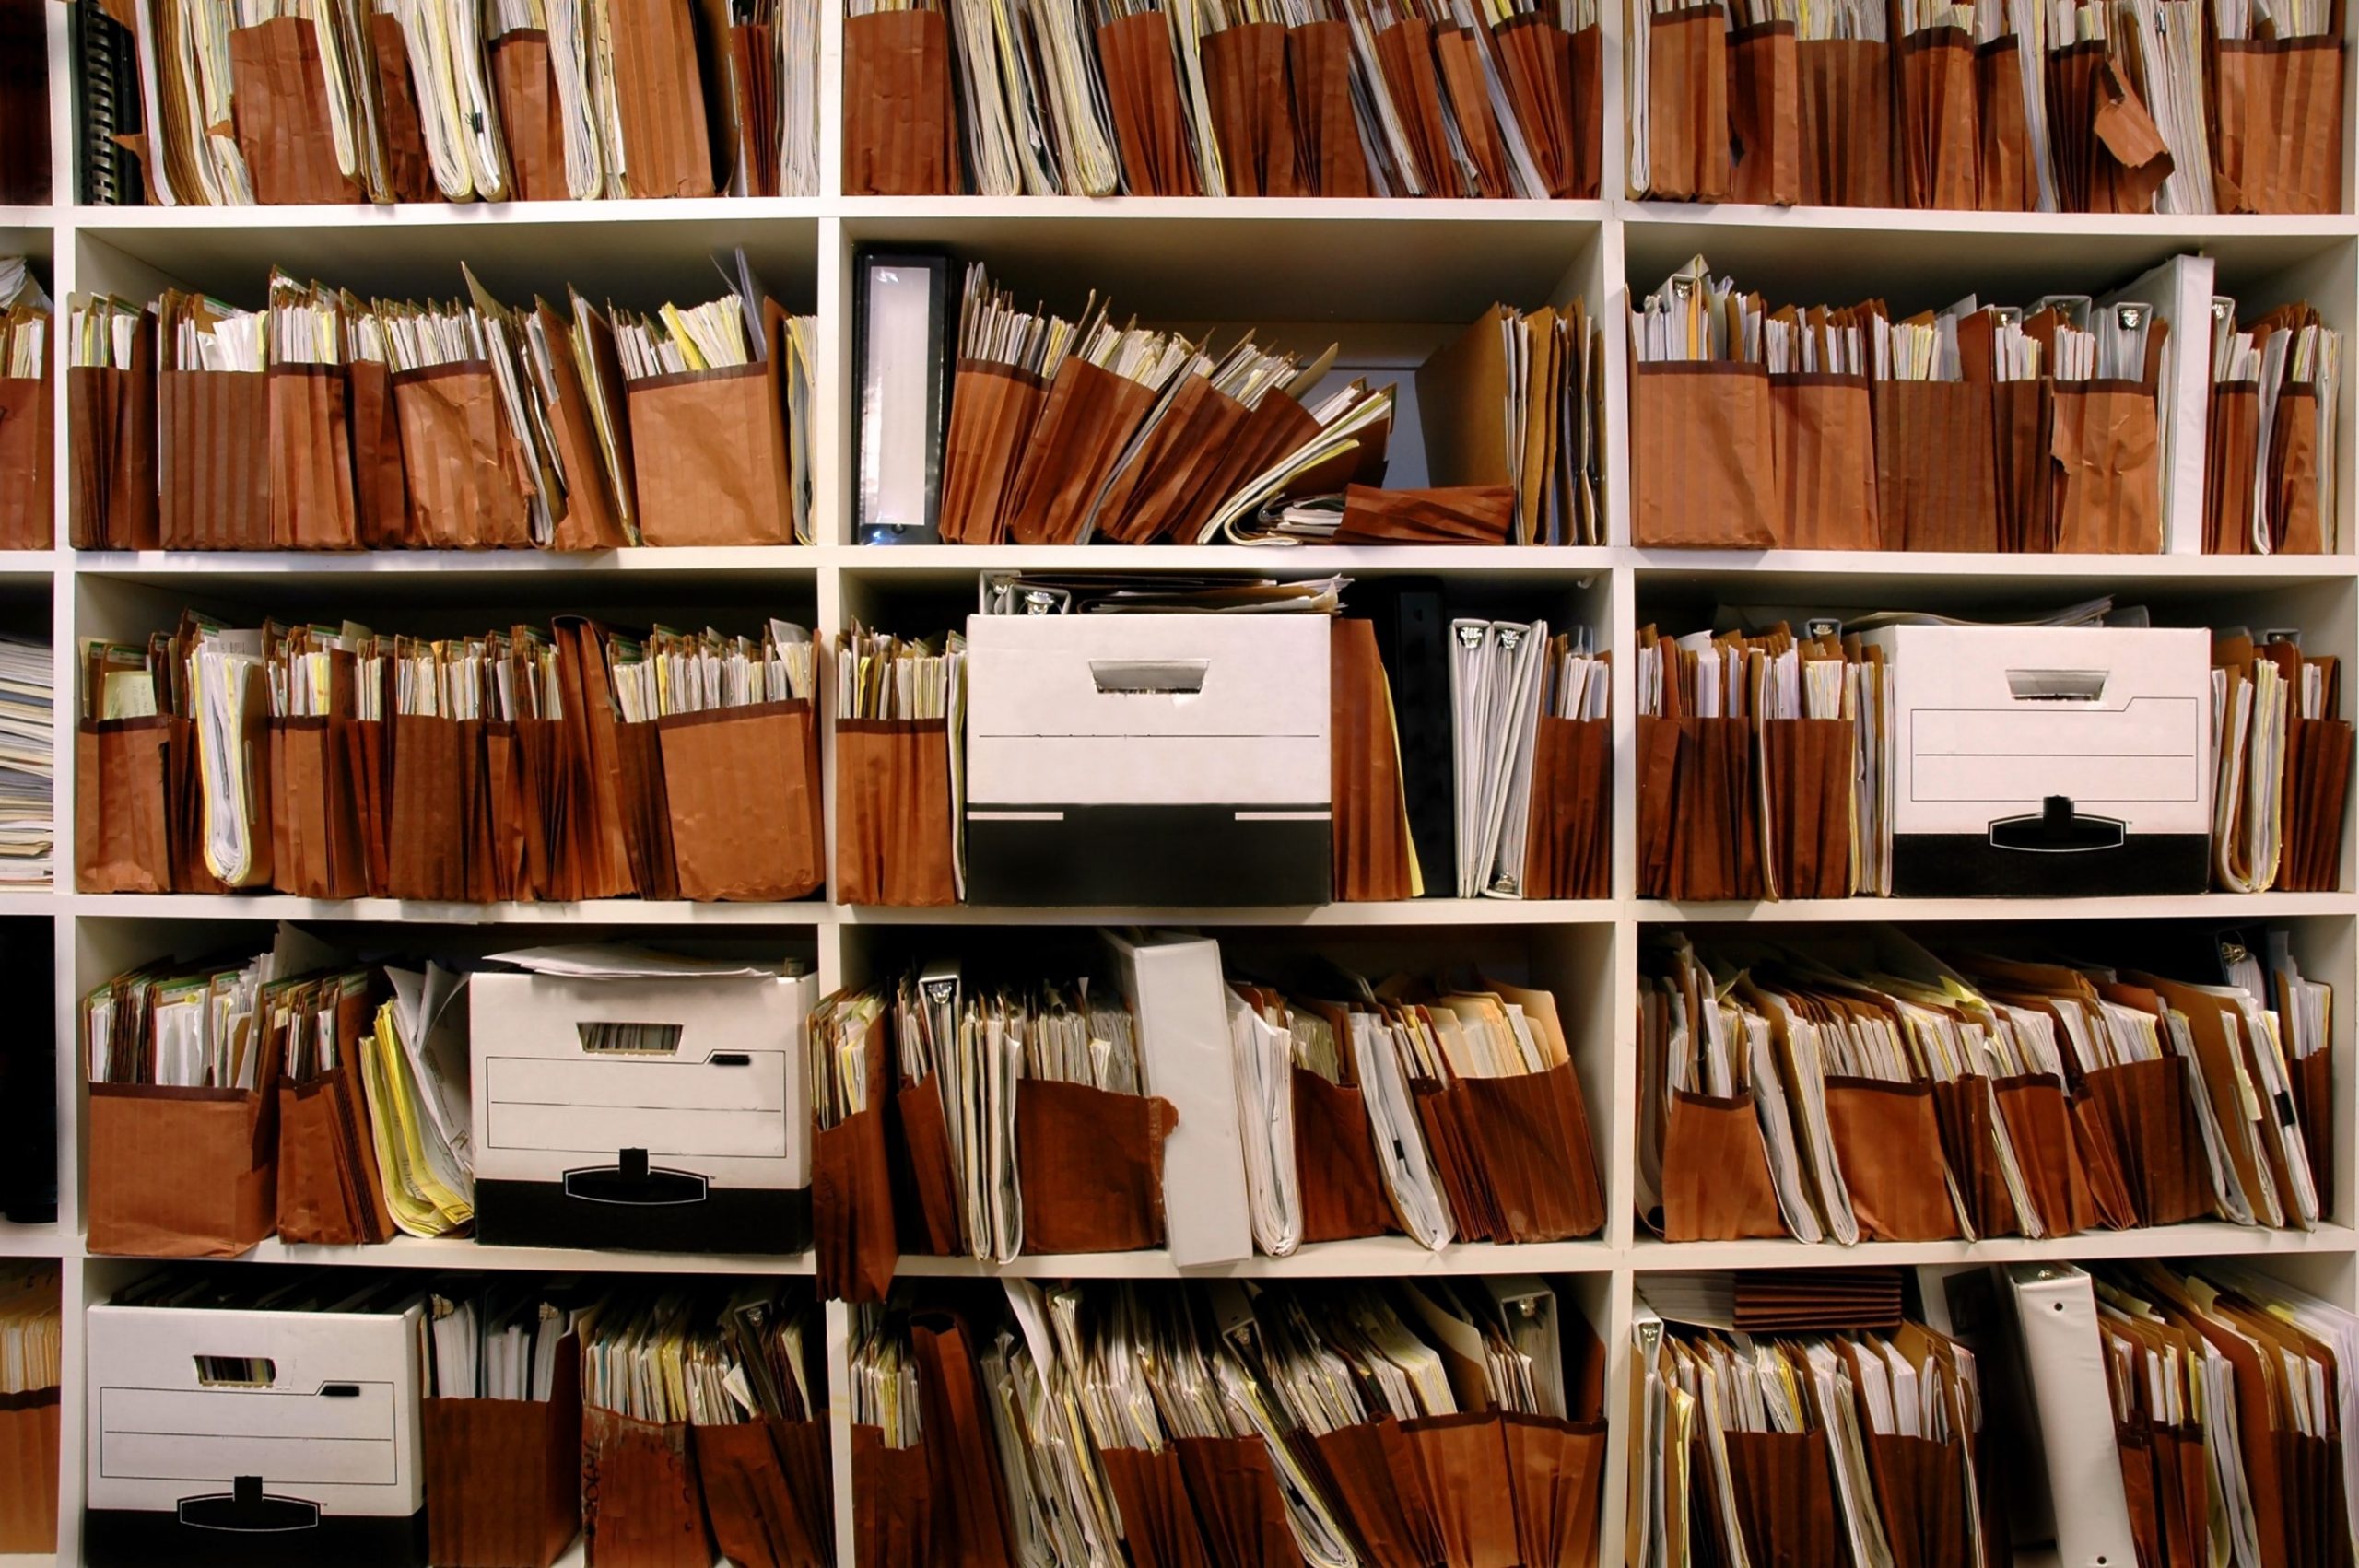 A shelf full of files